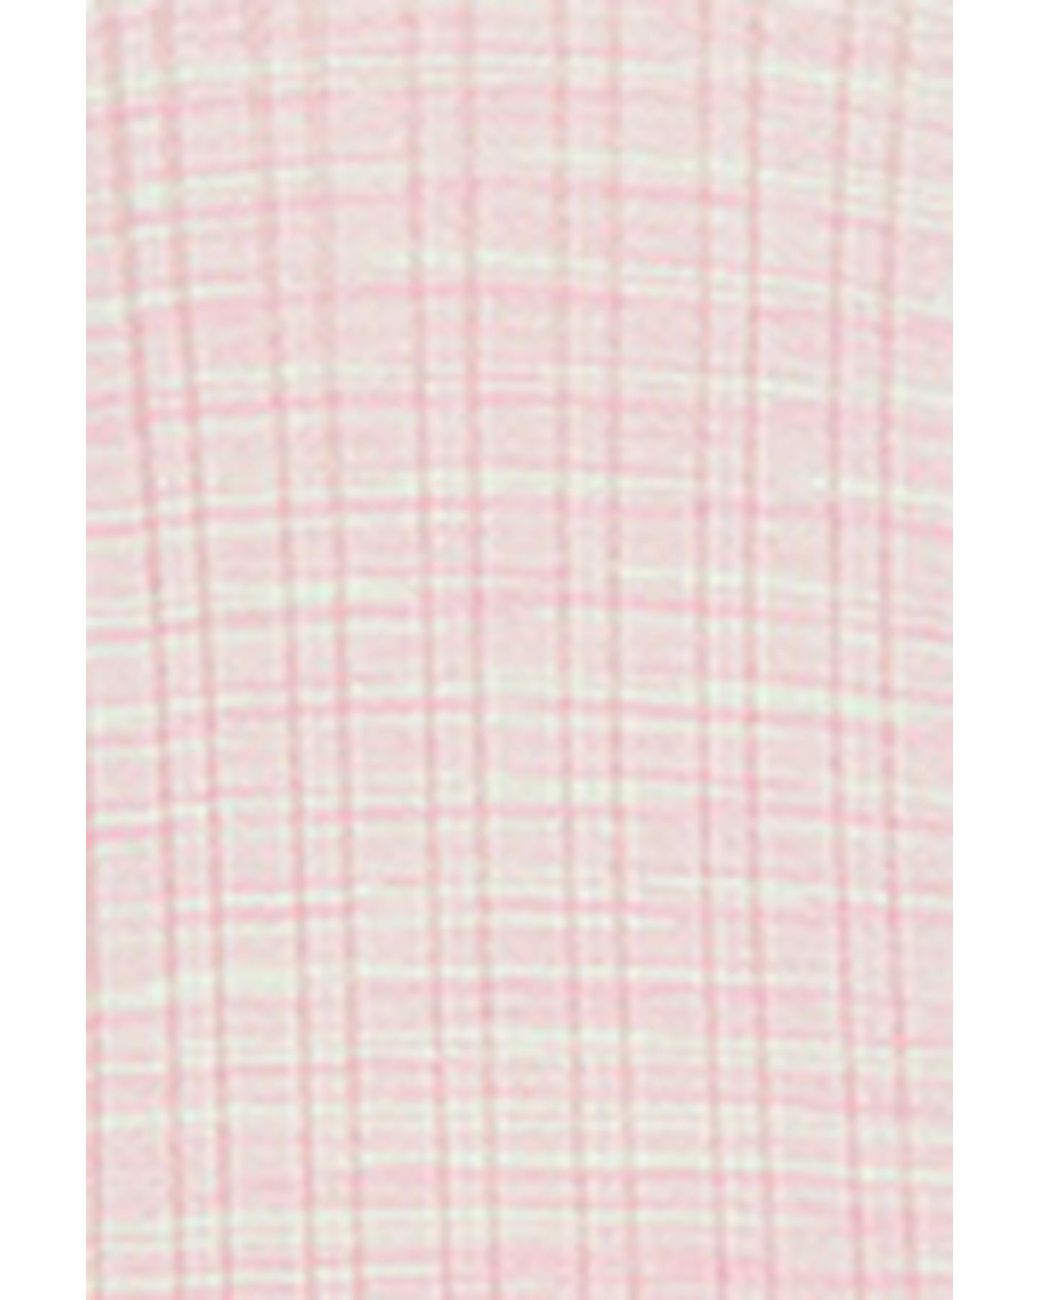 Louis Vuitton Lv Escale Polo Dress in Pink